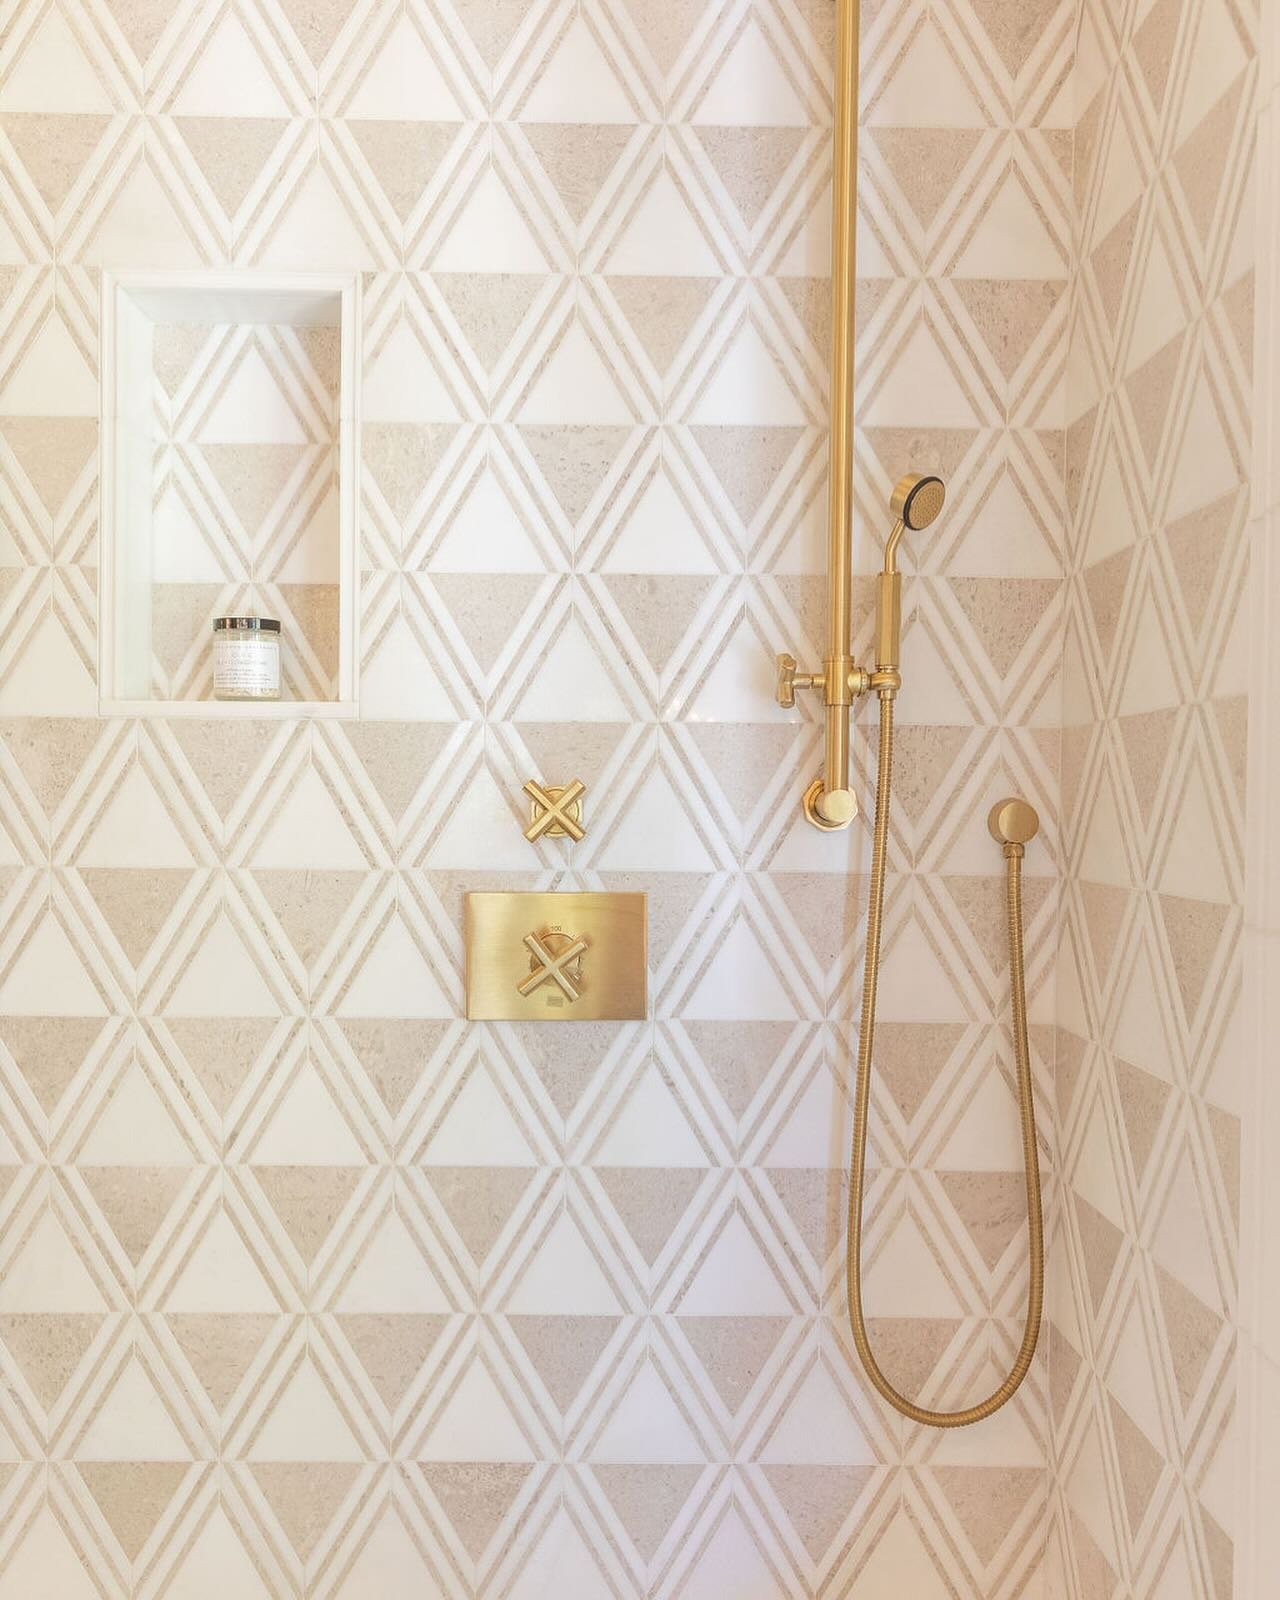 Sometimes the smallest details have the biggest impact. #interiordesign #biographicaldesign #bathroomdesign #shower #marble #mosaic #goldhardware